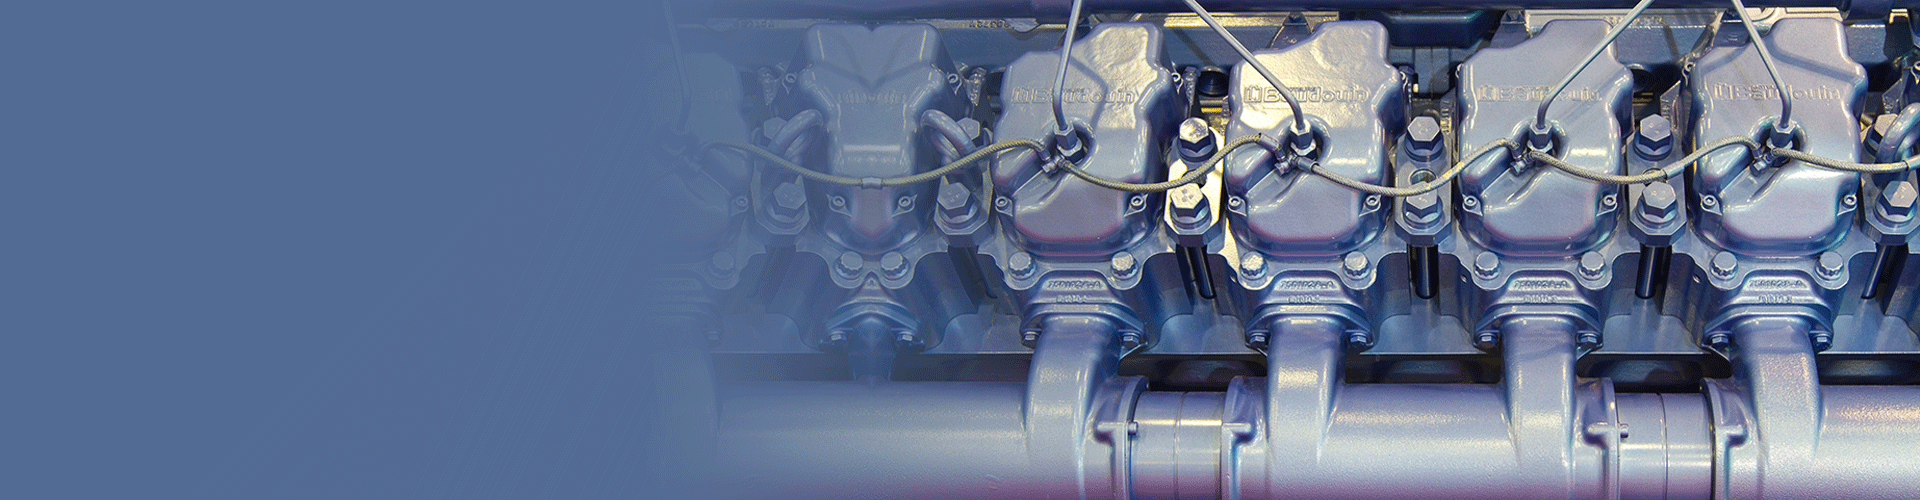 Trunk Piston Engine Oil